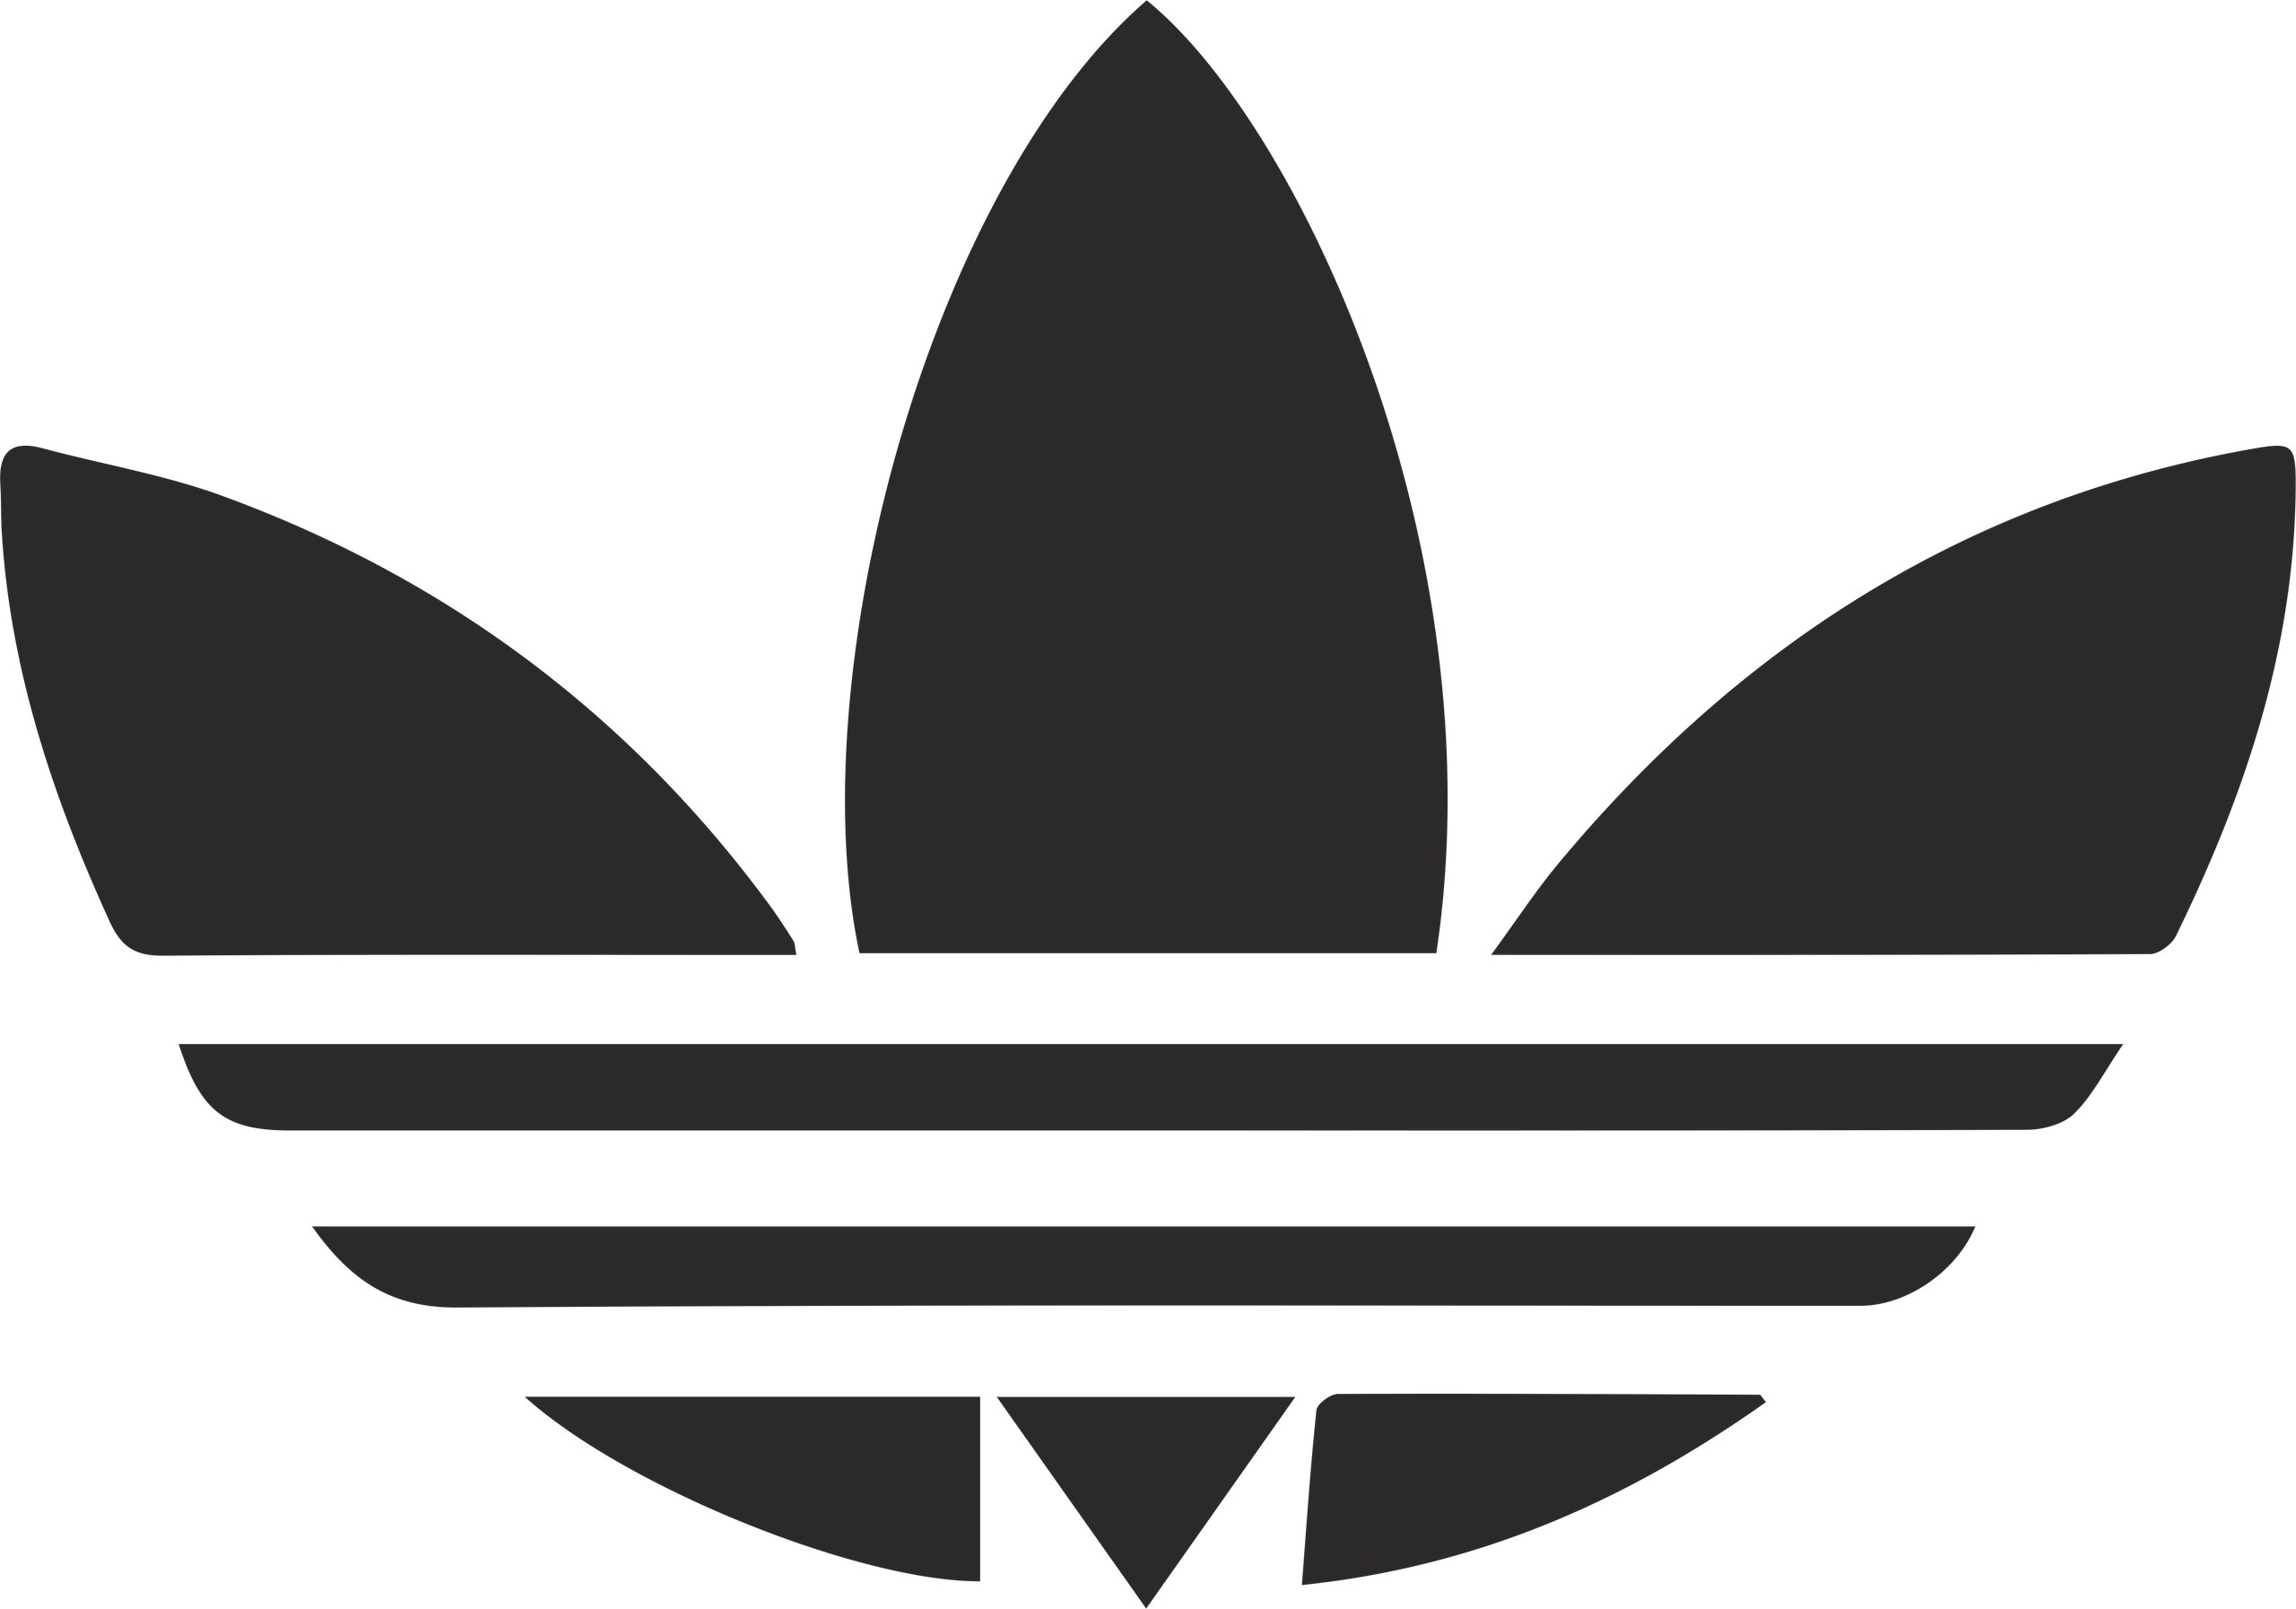 adidas logo vector free